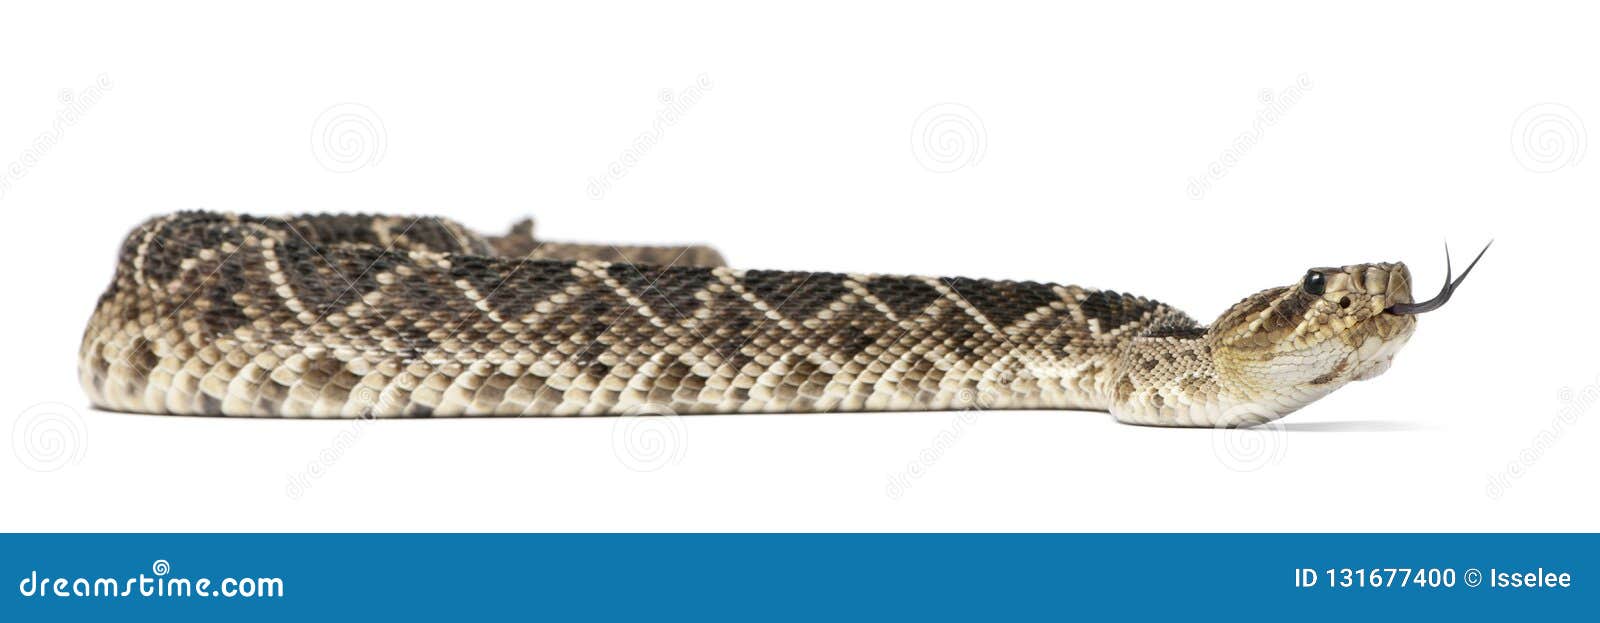 eastern diamondback rattlesnake - crotalus adamanteus , poisonous